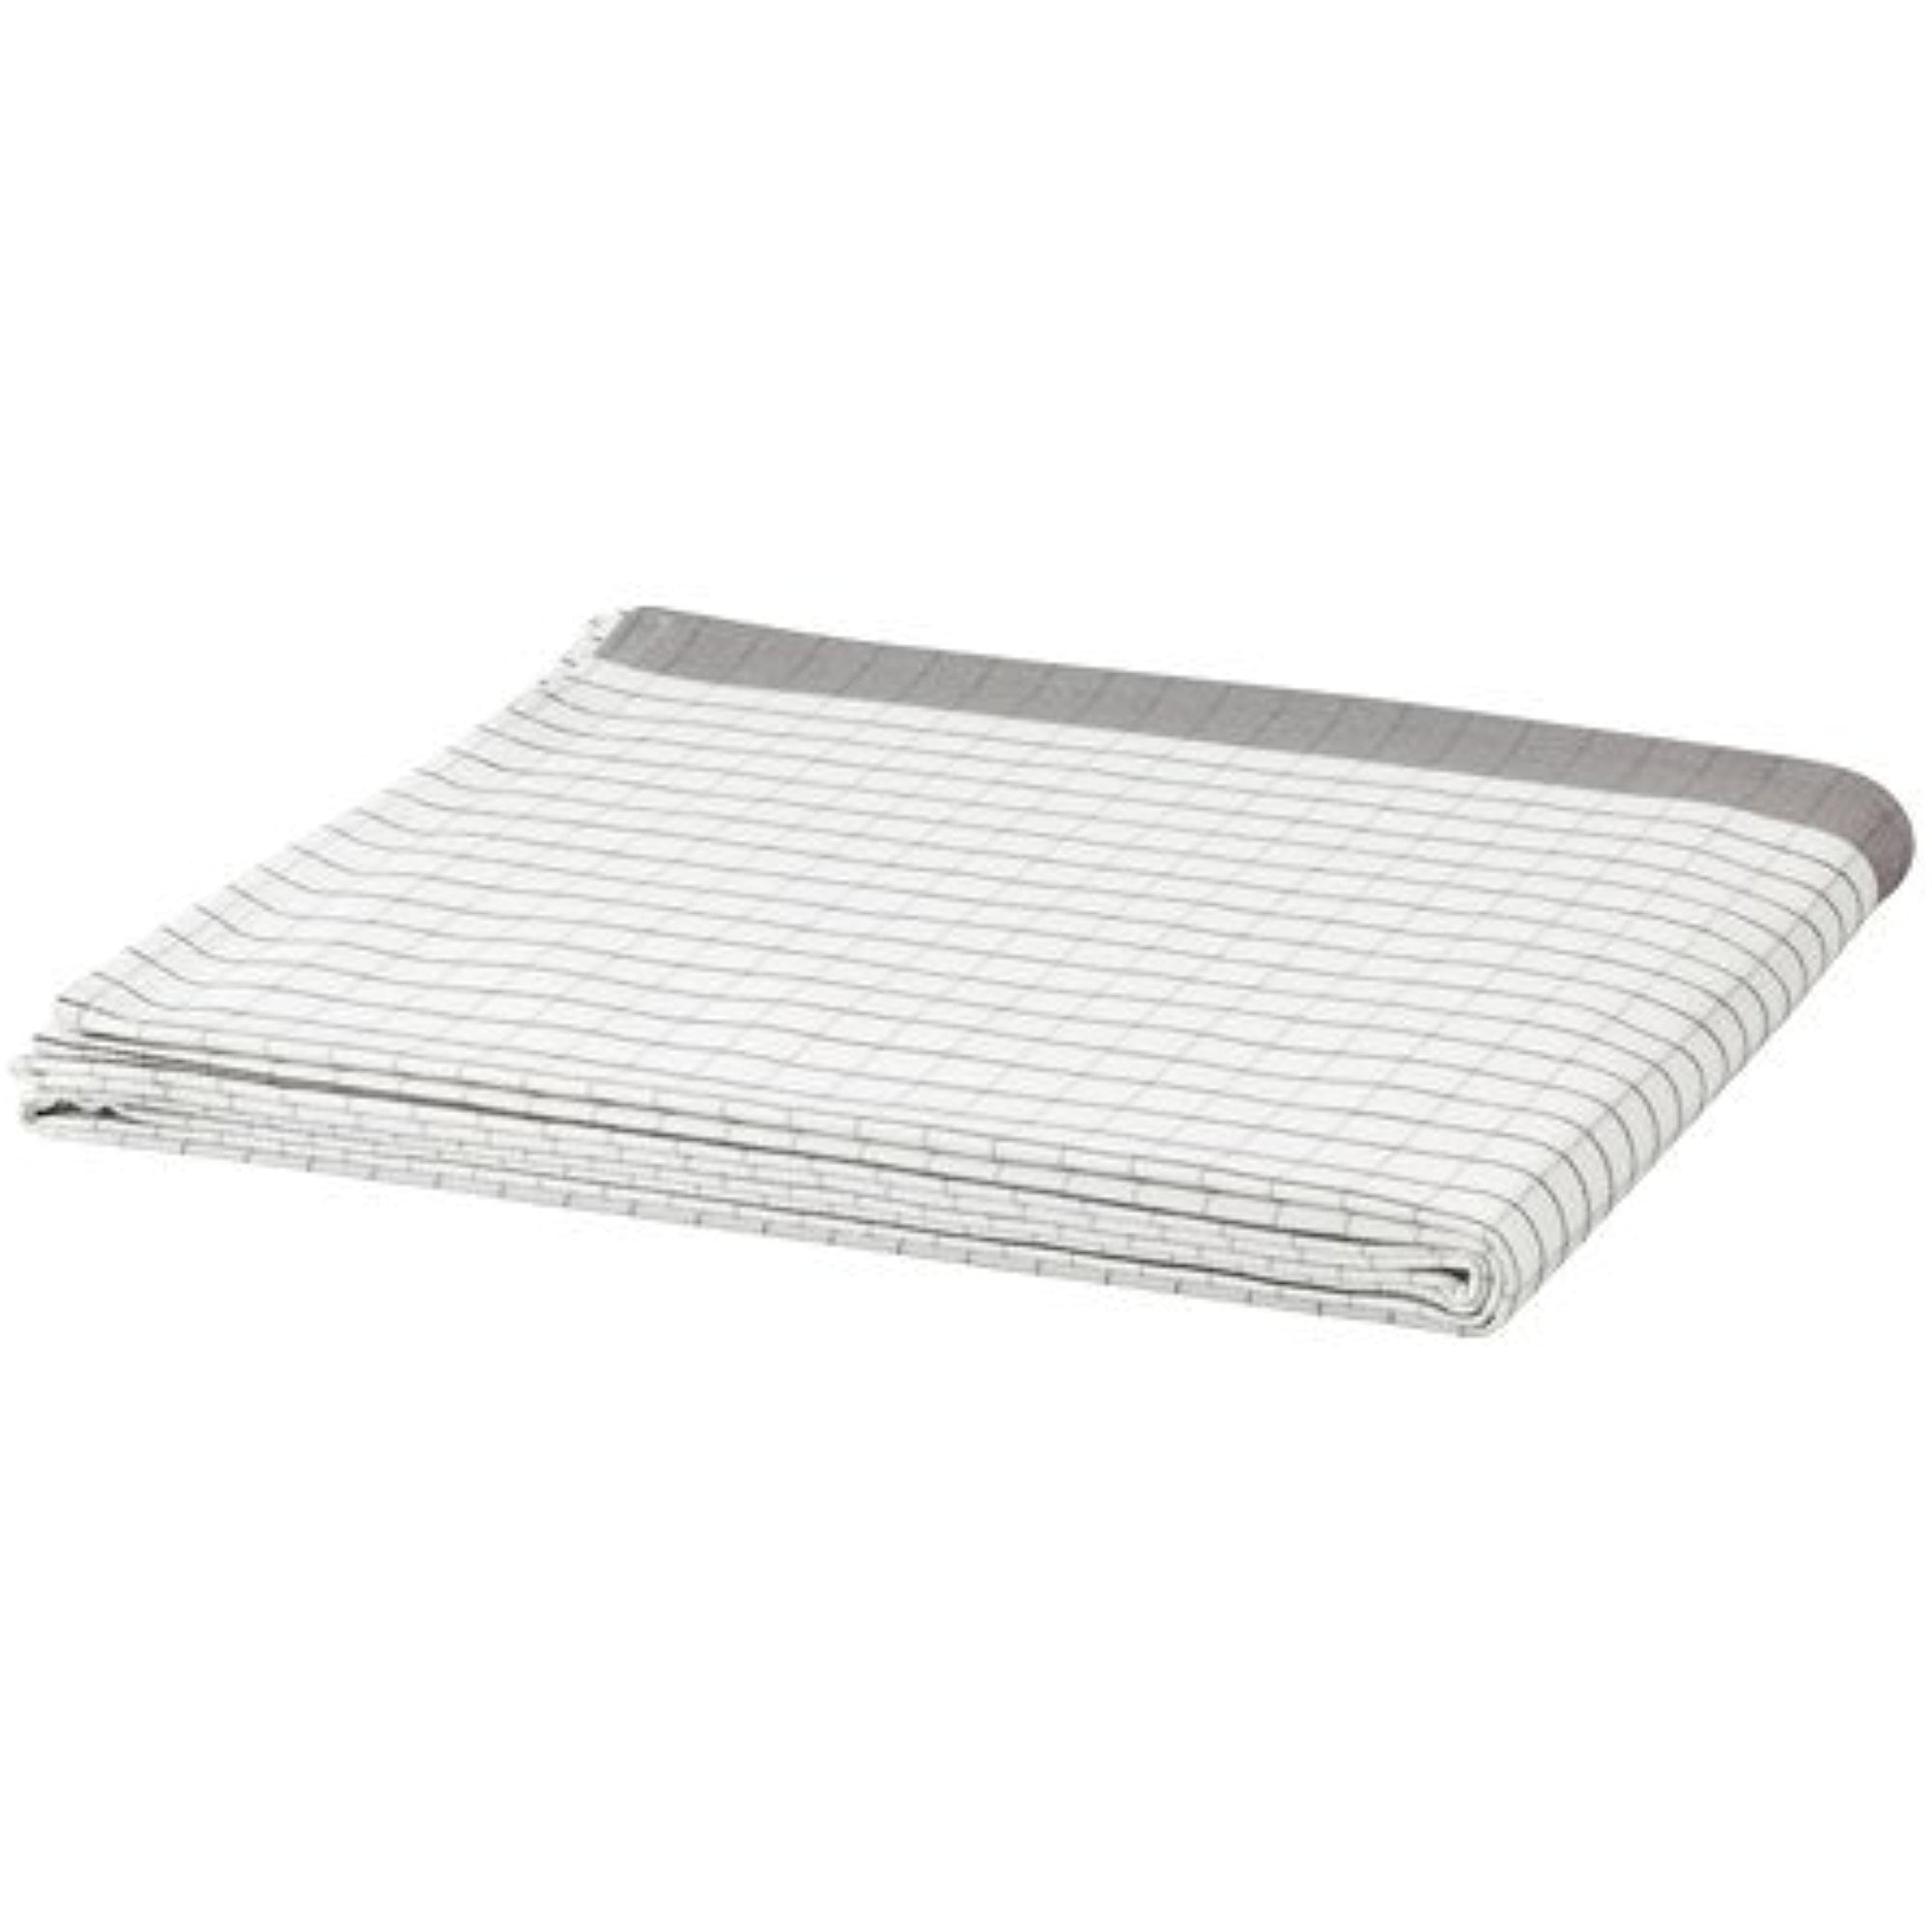 Zoeken Klassiek Plantage Ikea Tablecloth, white, gray 57x126 ", 426.172326.622 - Walmart.com